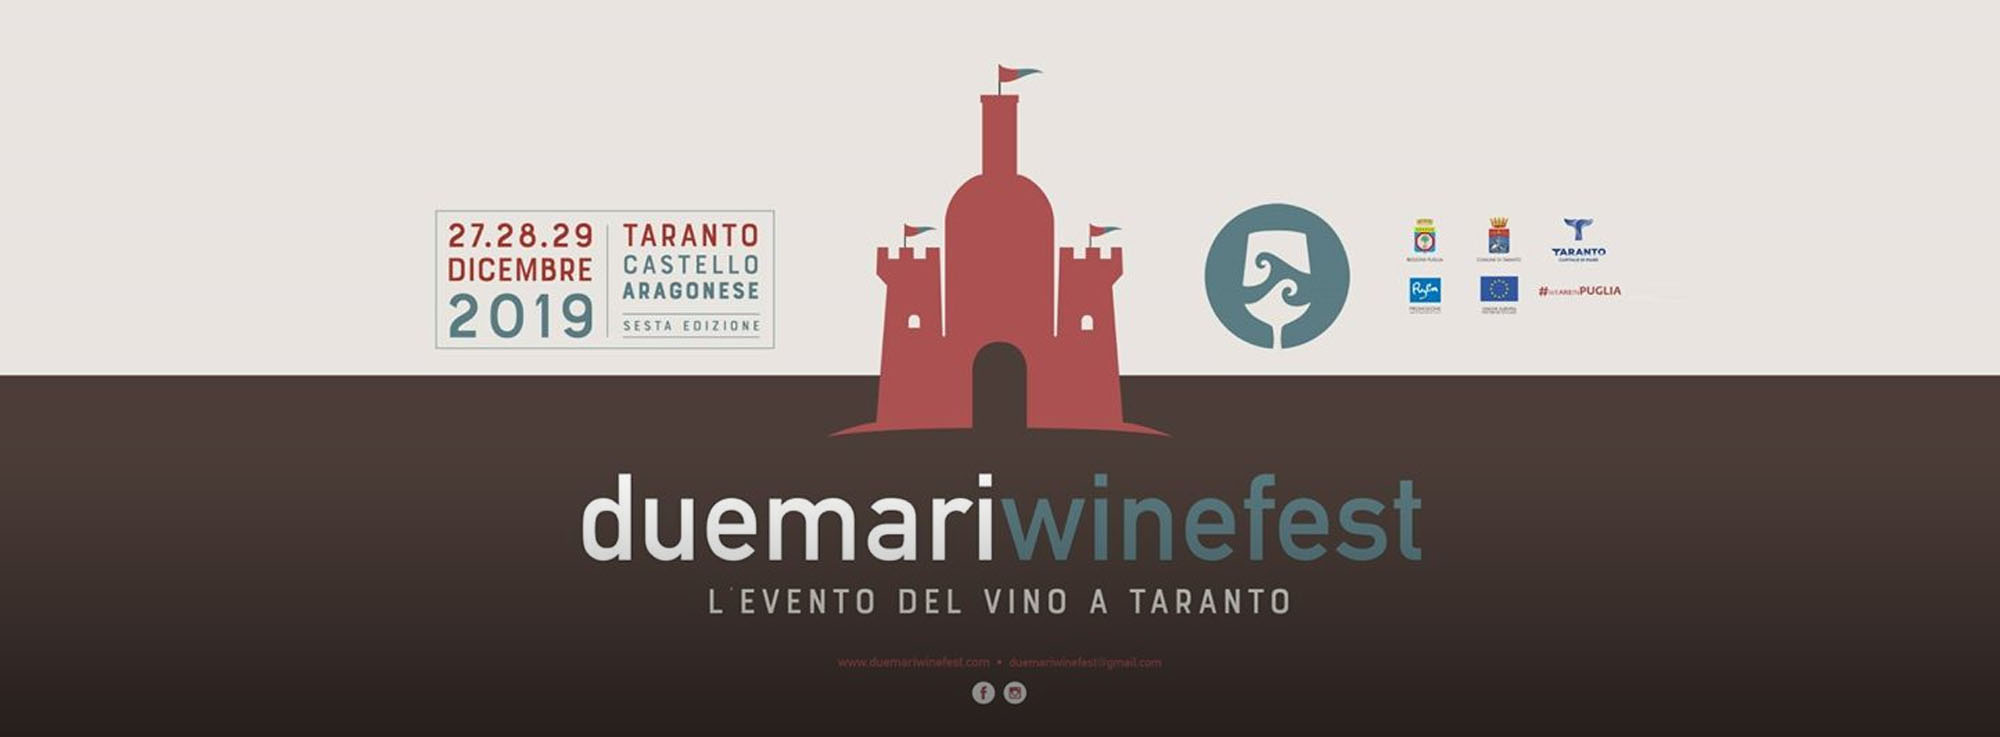 Taranto: Due Mari WineFest – Winter Edition 2019